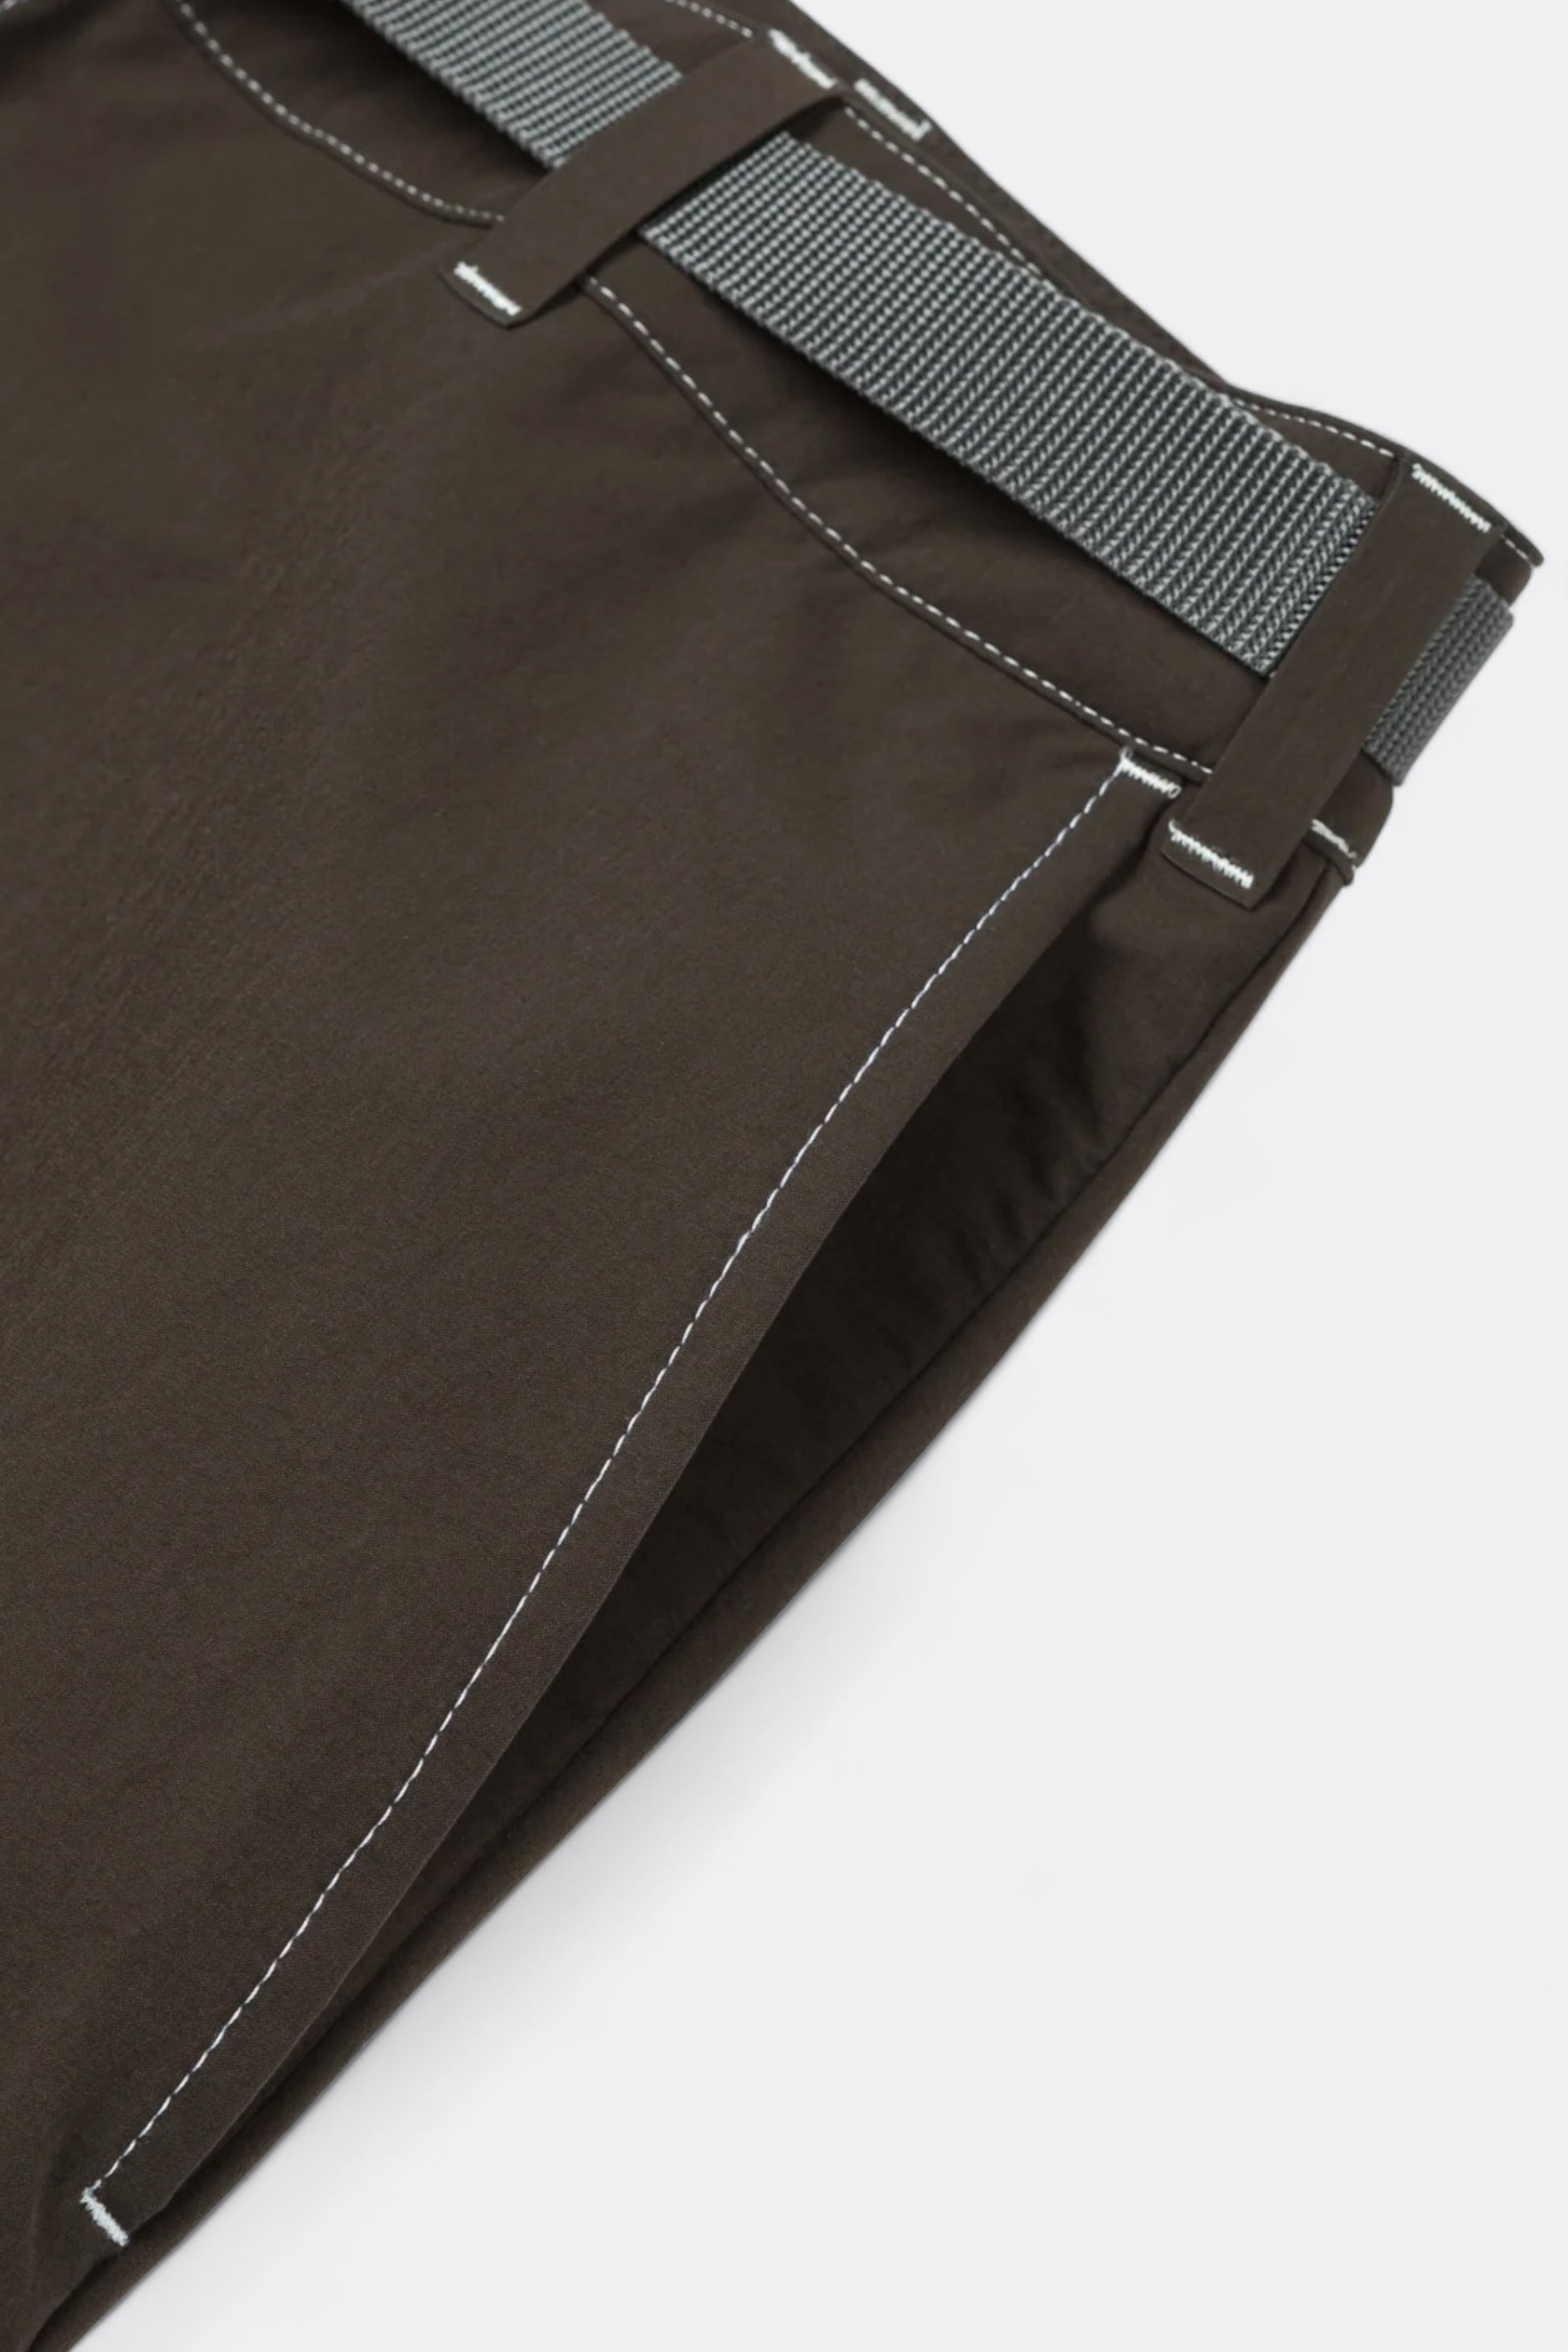 Satisfy - PeaceShell™ Standard Climb Pants (Brown)